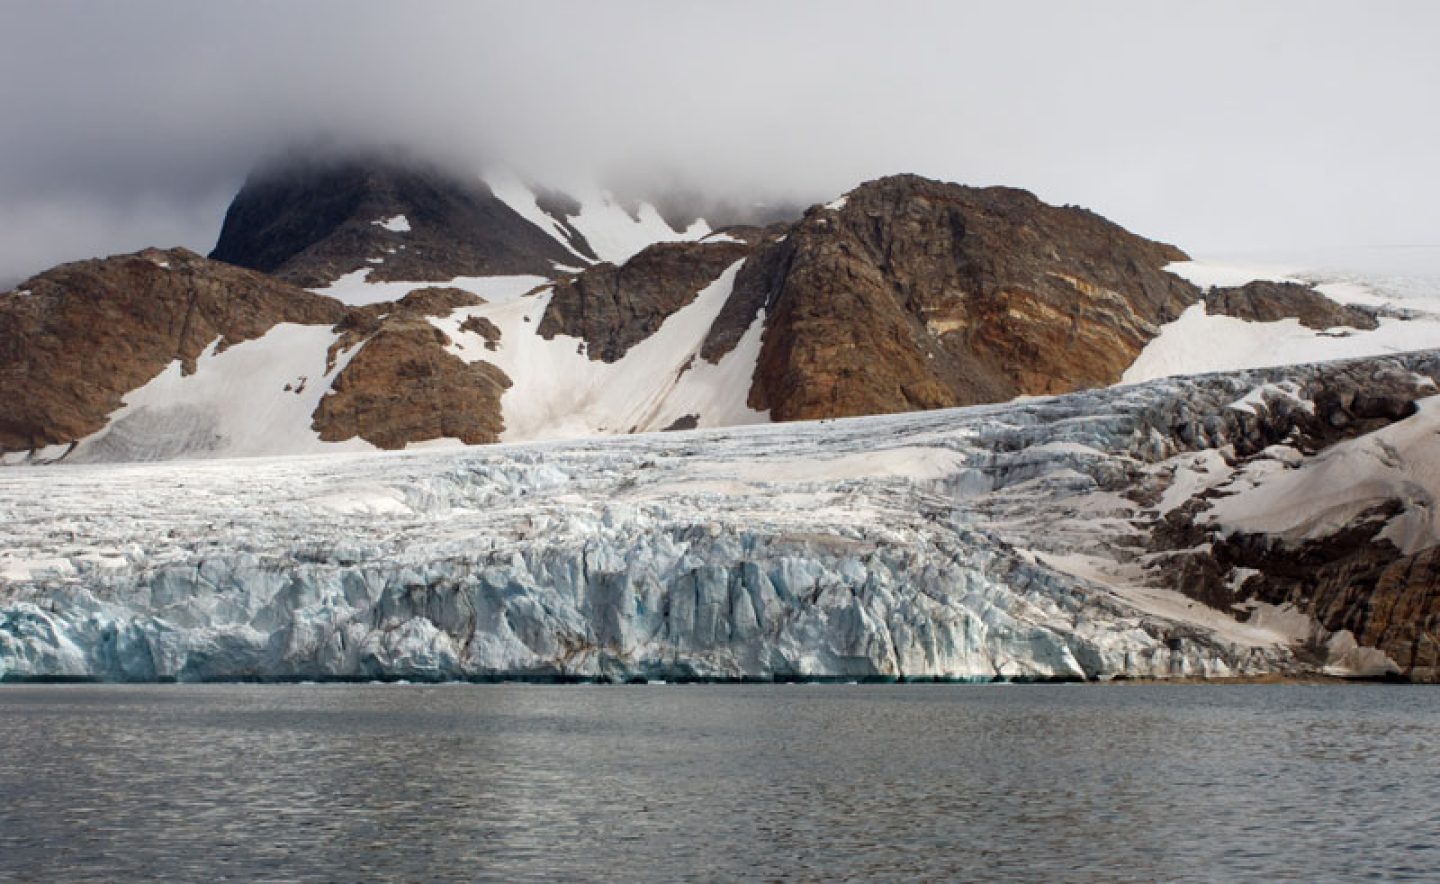 greenland apusiaajik glacier